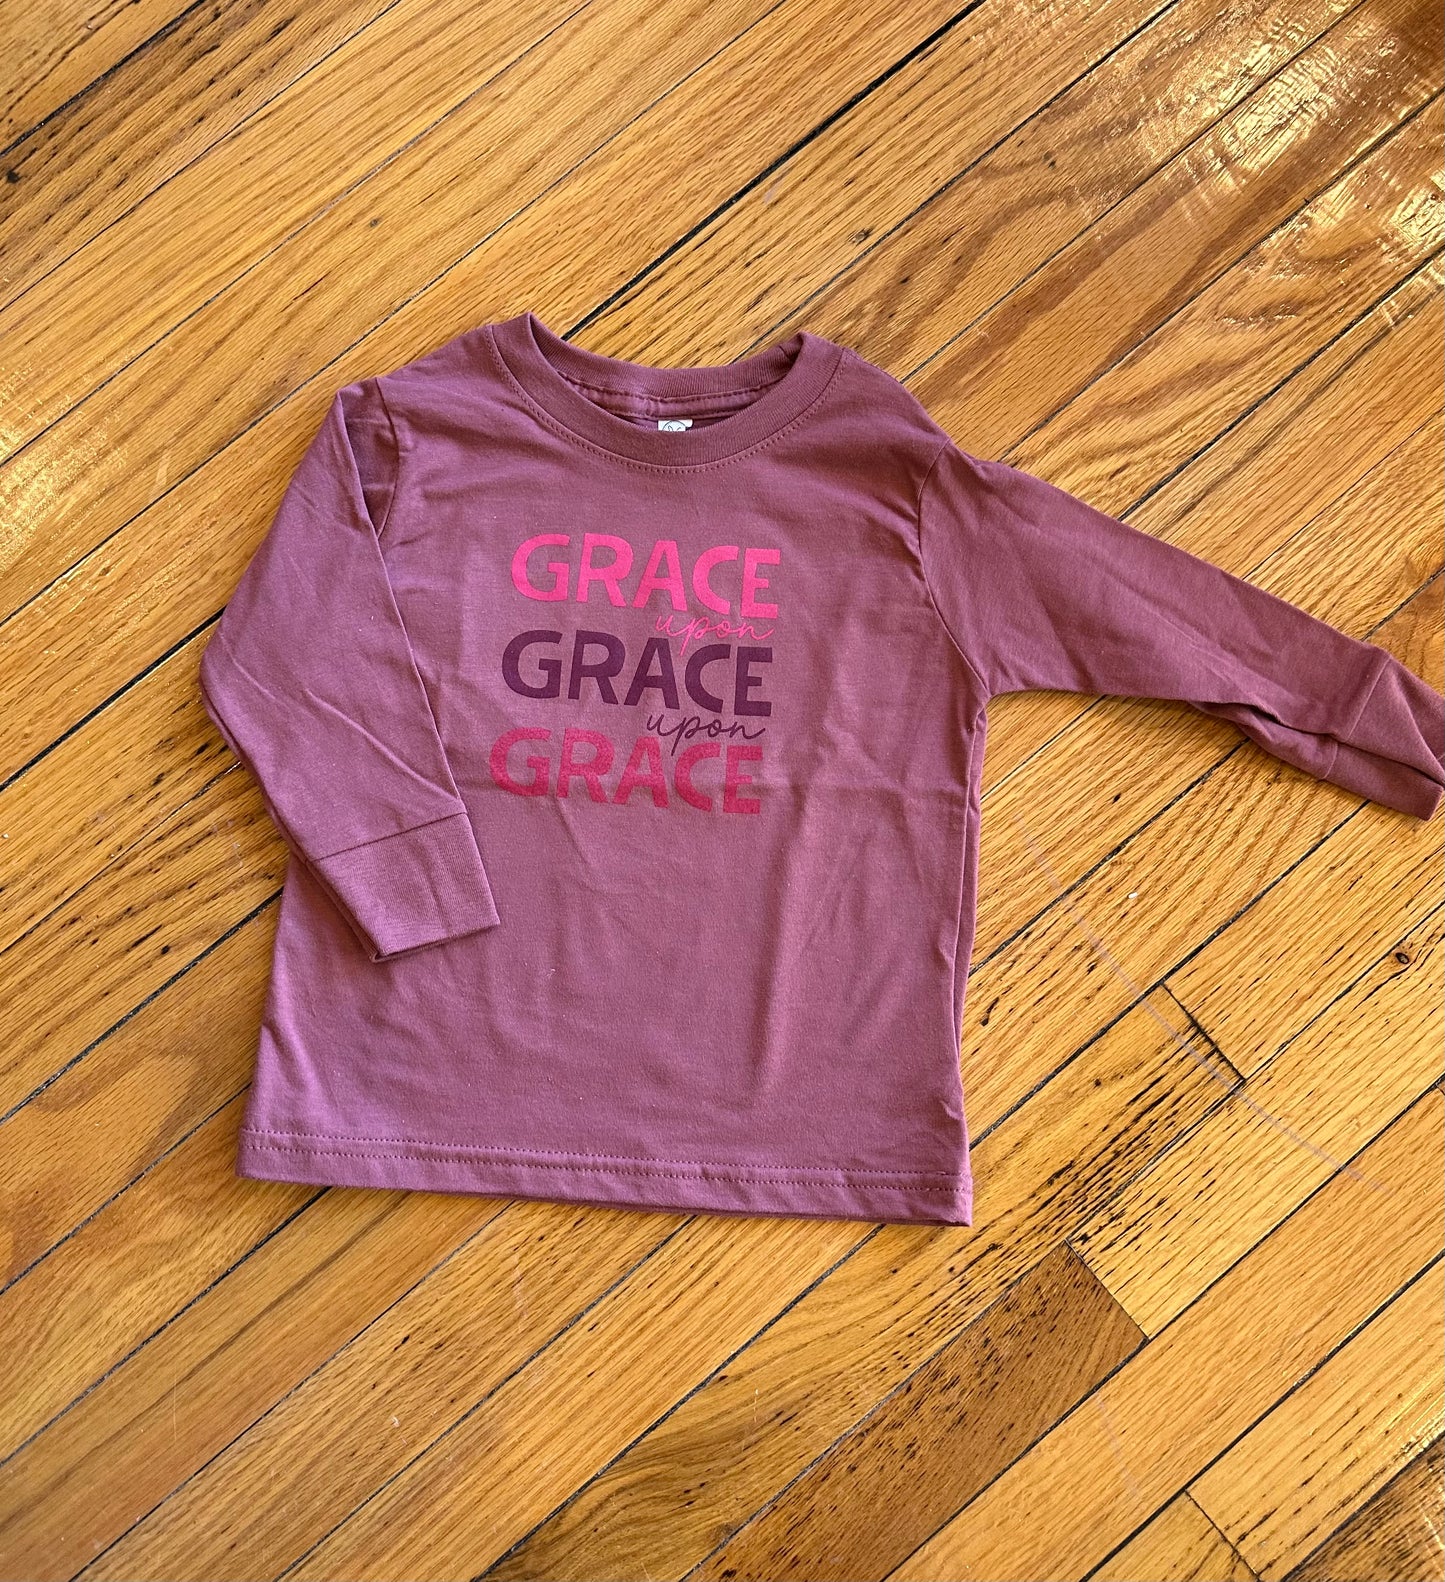 Grace upon Grace toddler, long